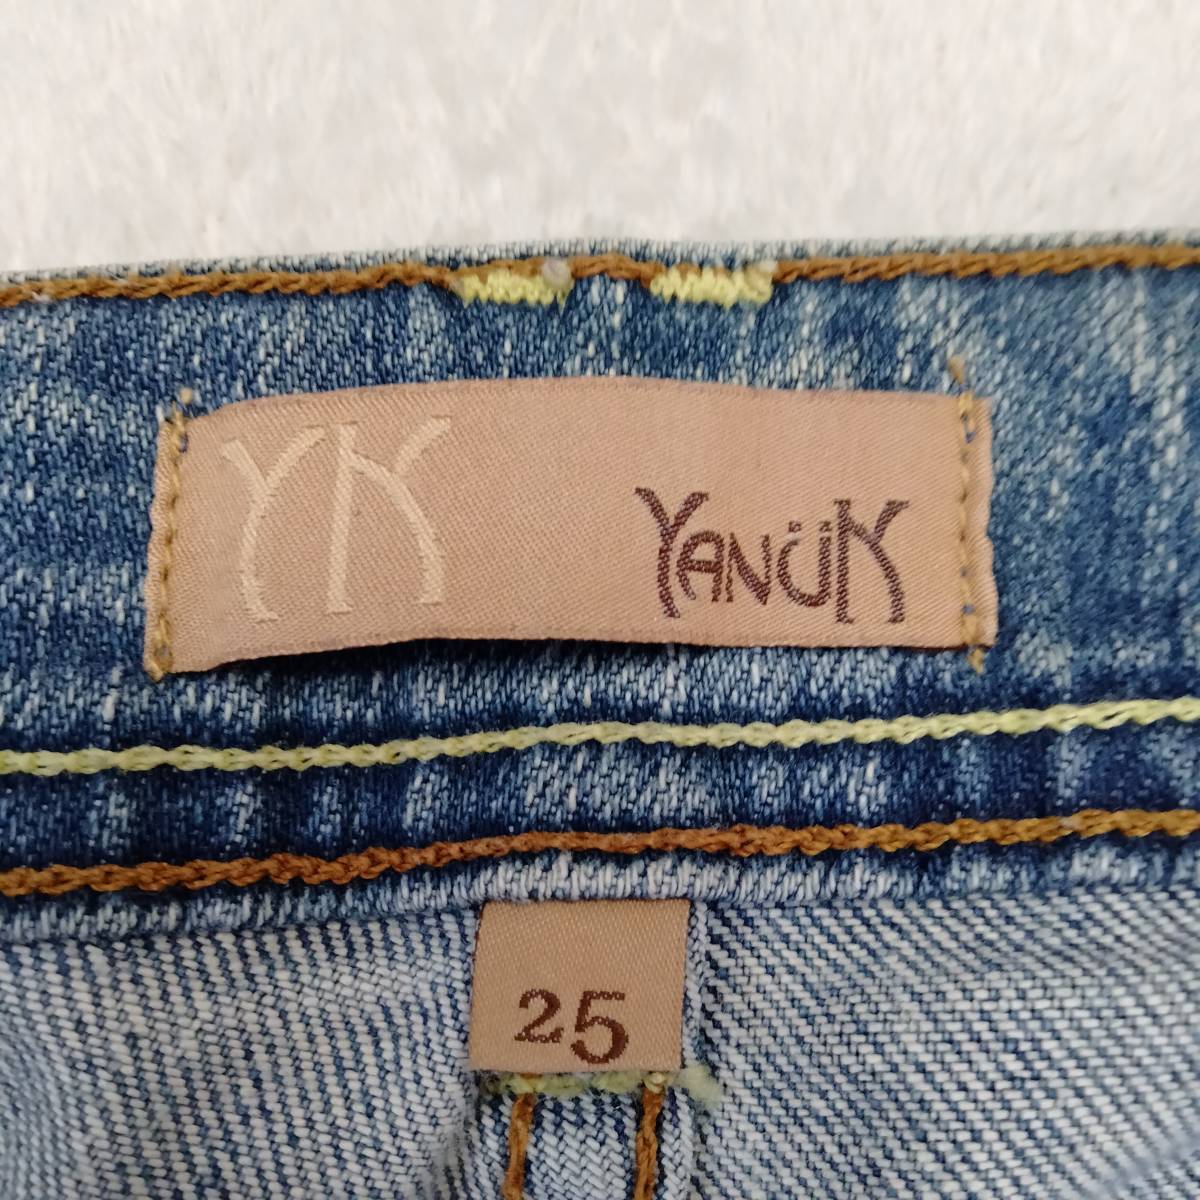 YANUK Yanuk flair Denim pants jeans bottoms woshu processing full length pocket belt loop blue size 25 YFF61